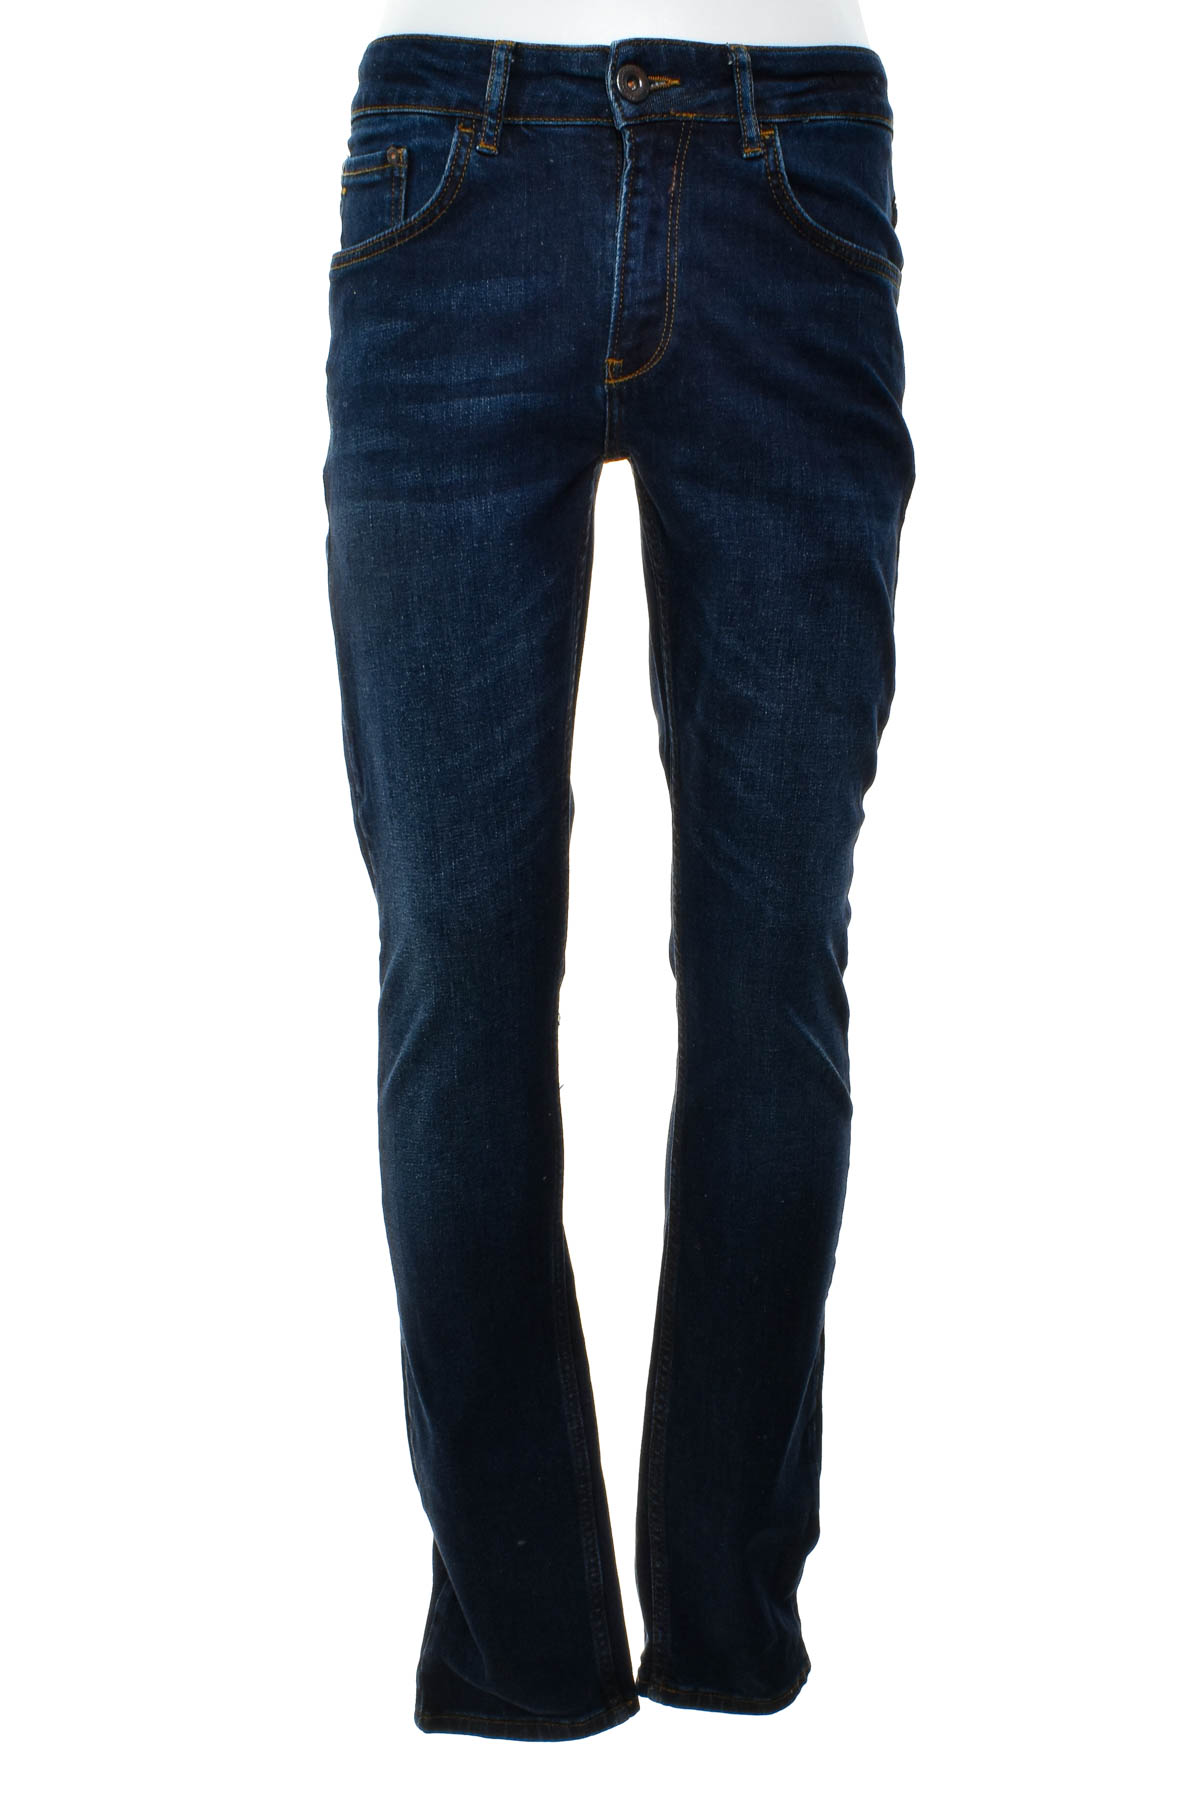 Men's jeans - QUARTERBACK by jbc - 0